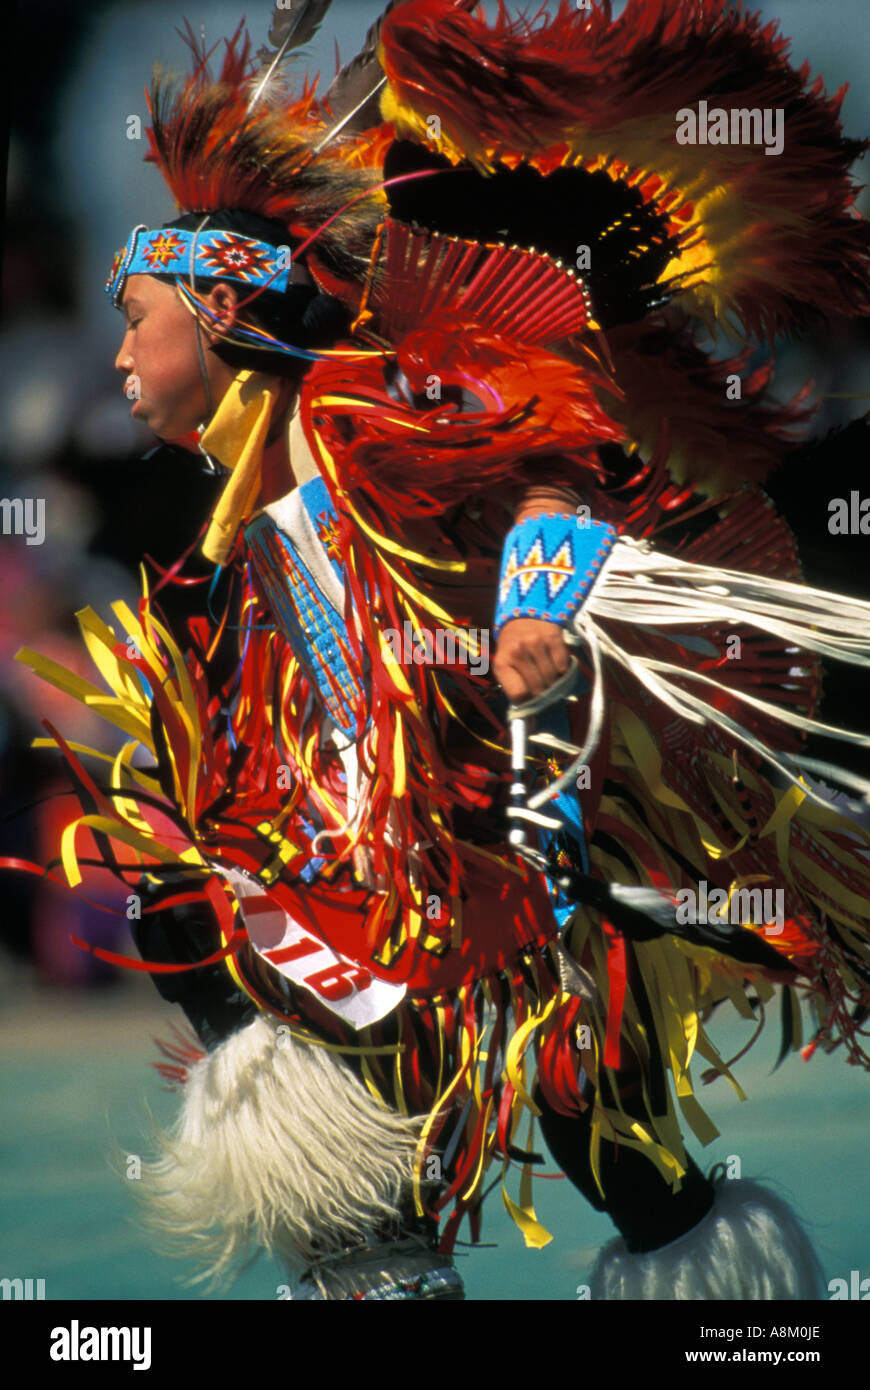 USA IDAHO NATIVE AMERICAN Indian boy in traditionanl dress dancing at ...